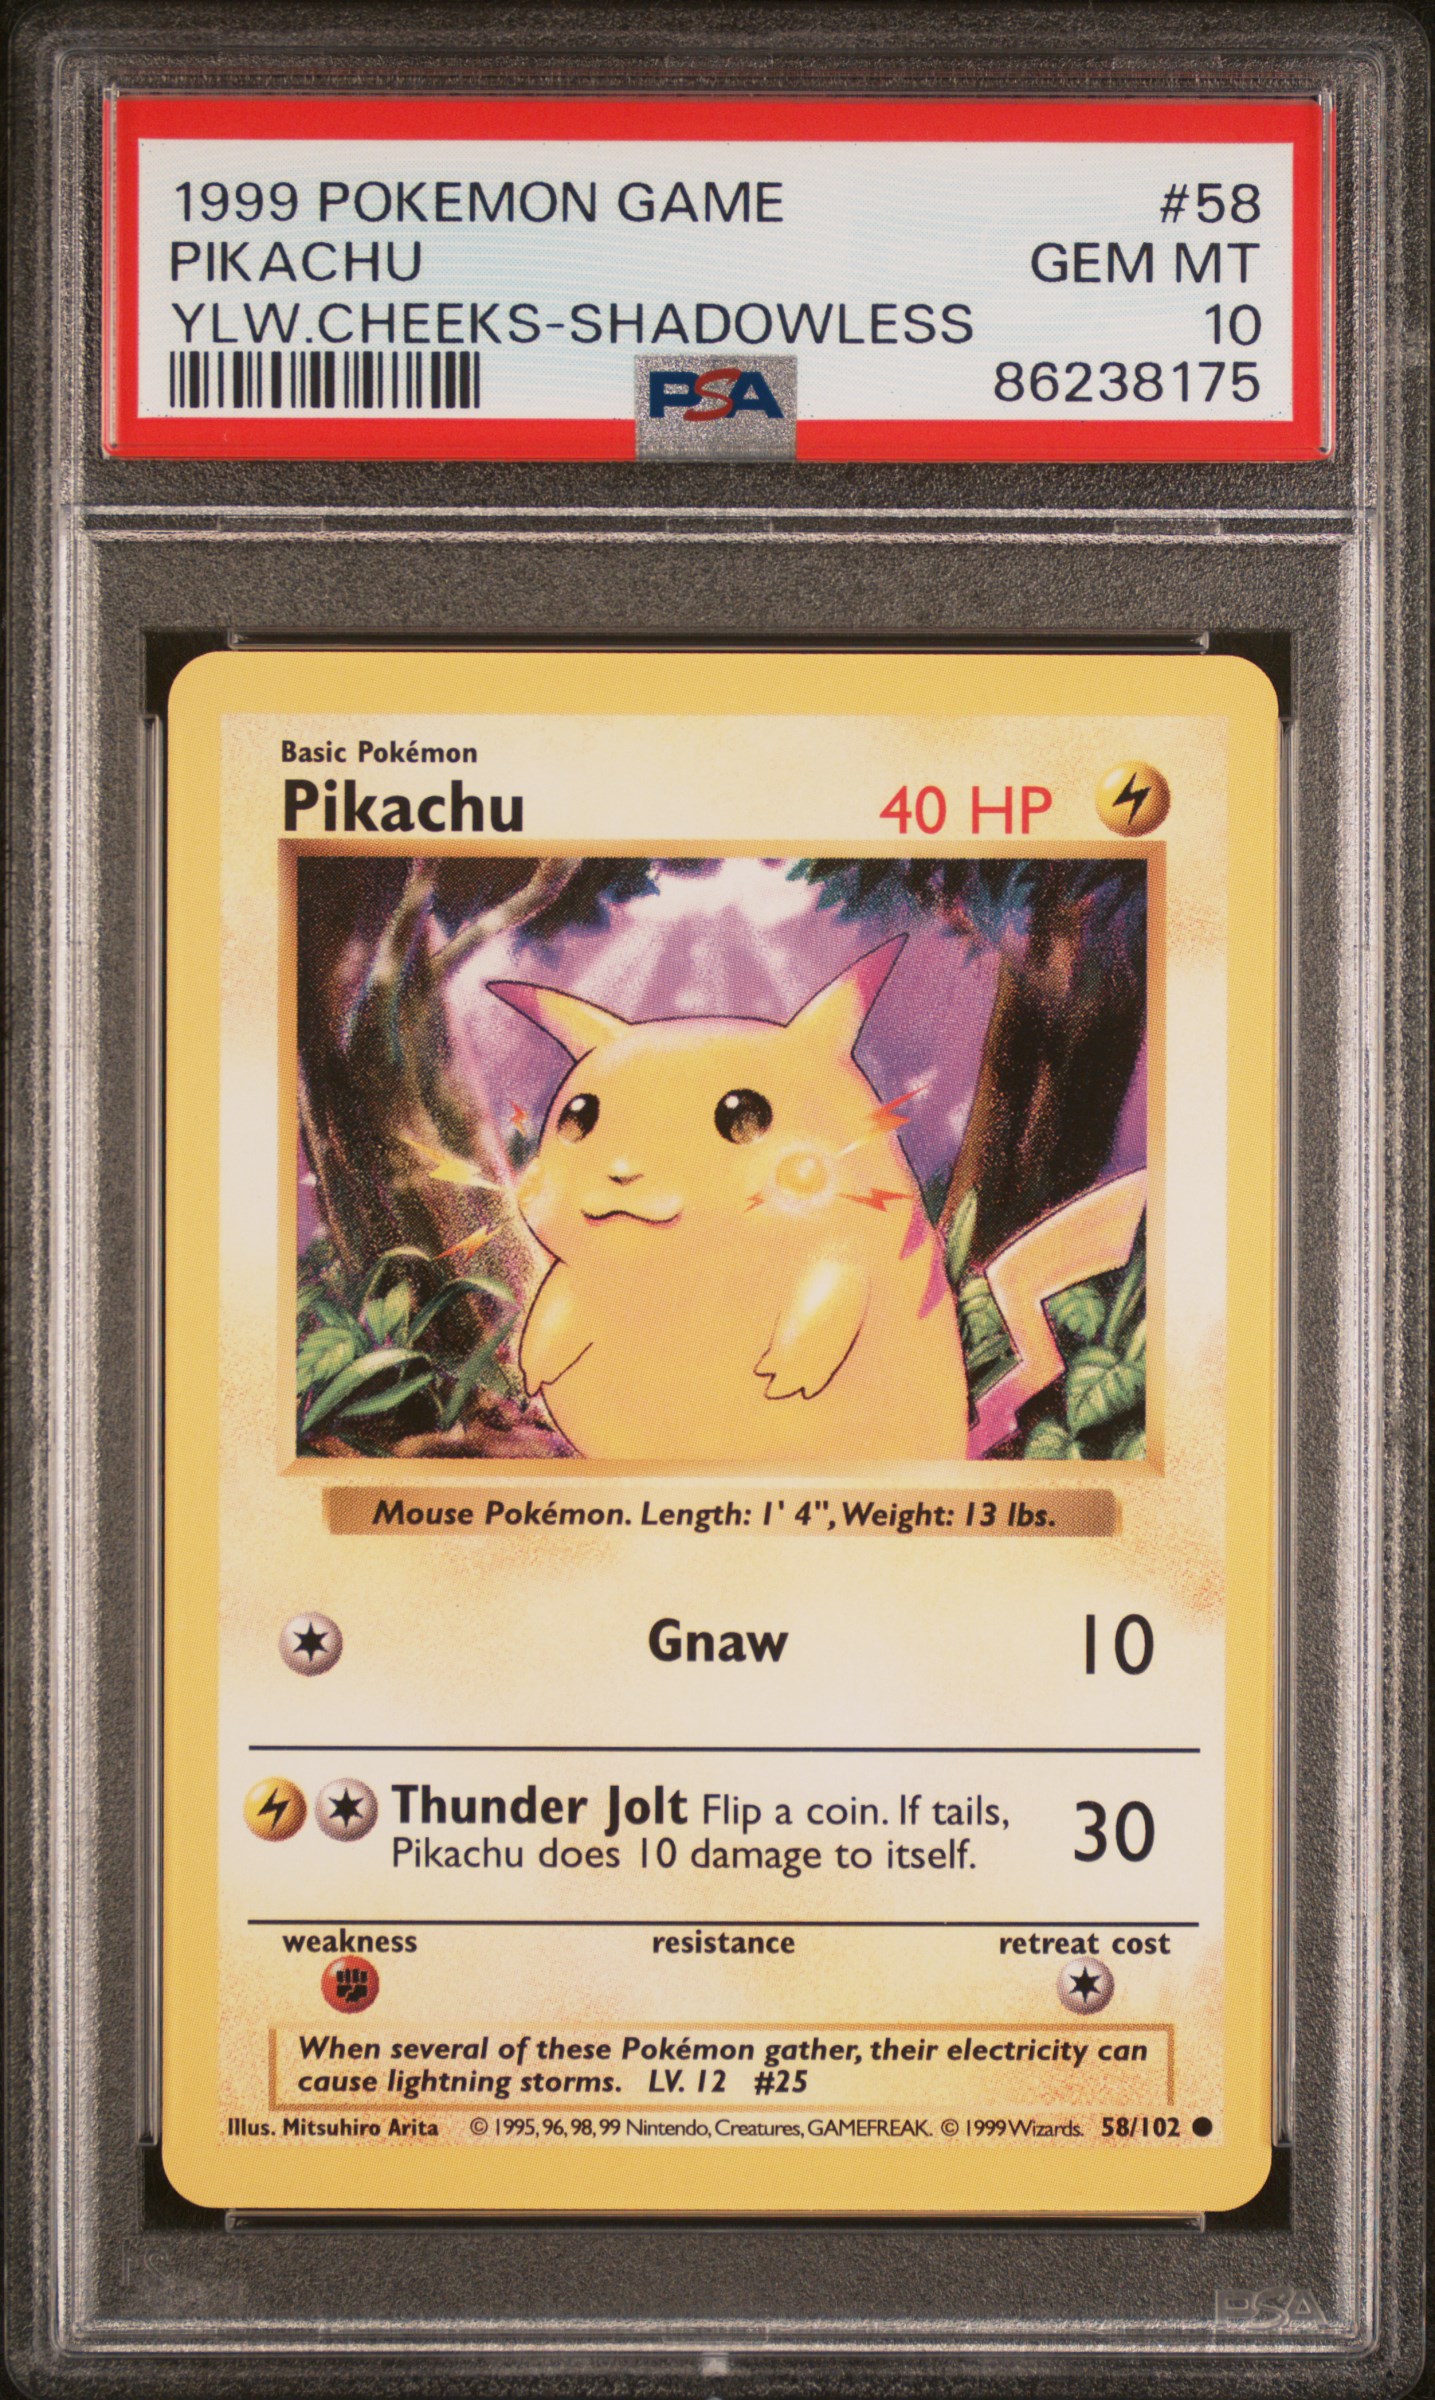 1999 Pokemon Game Yellow Cheeks-Shadowless 58 Pikachu – PSA GEM MT 10